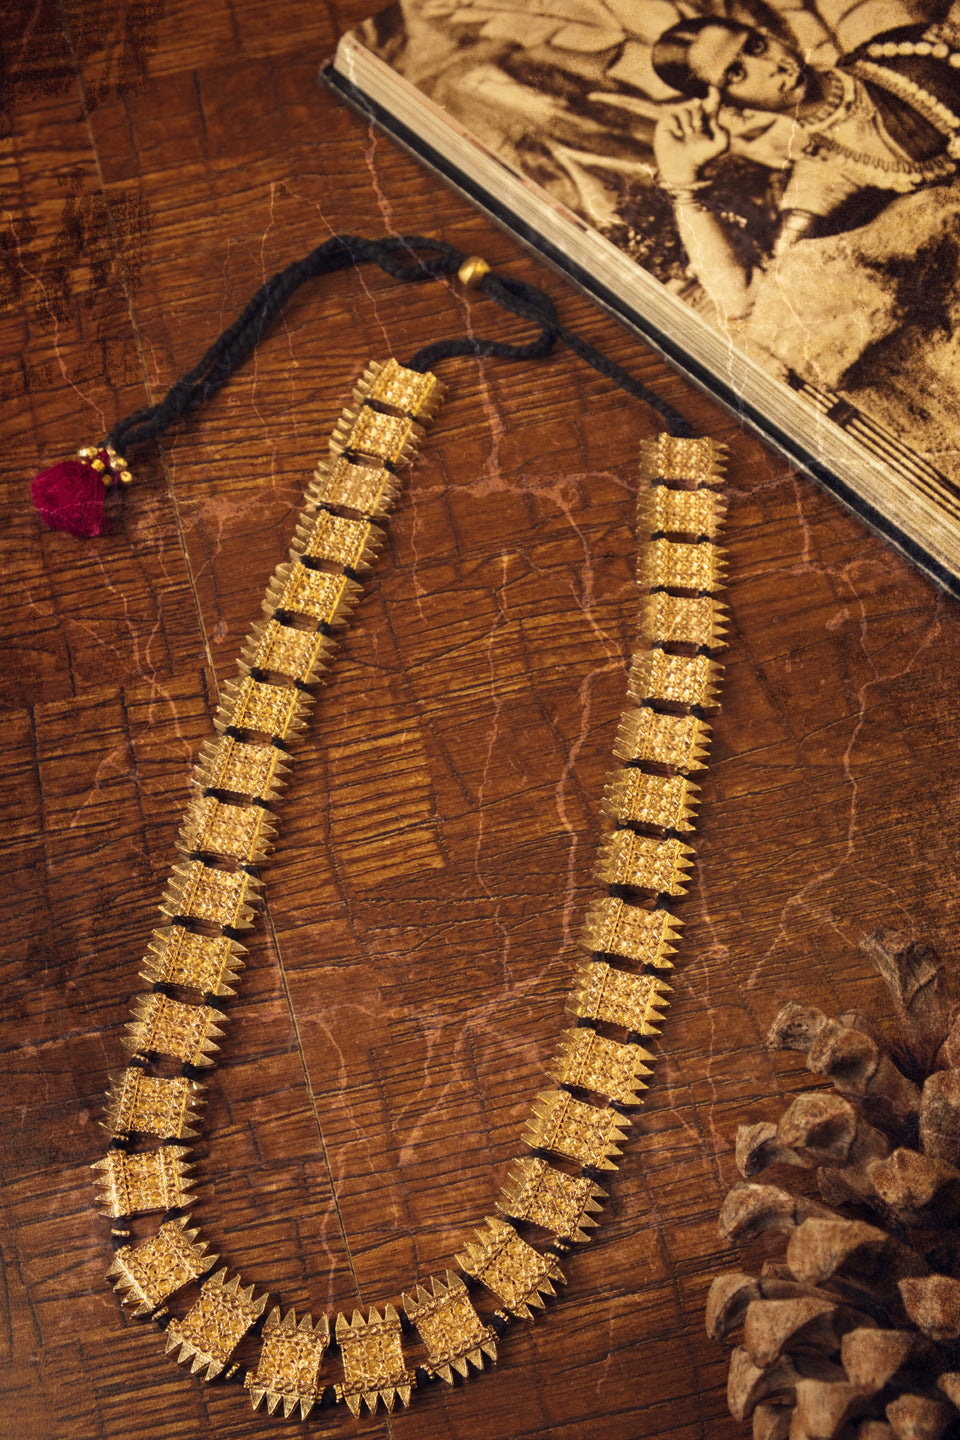 Rani Long Necklace